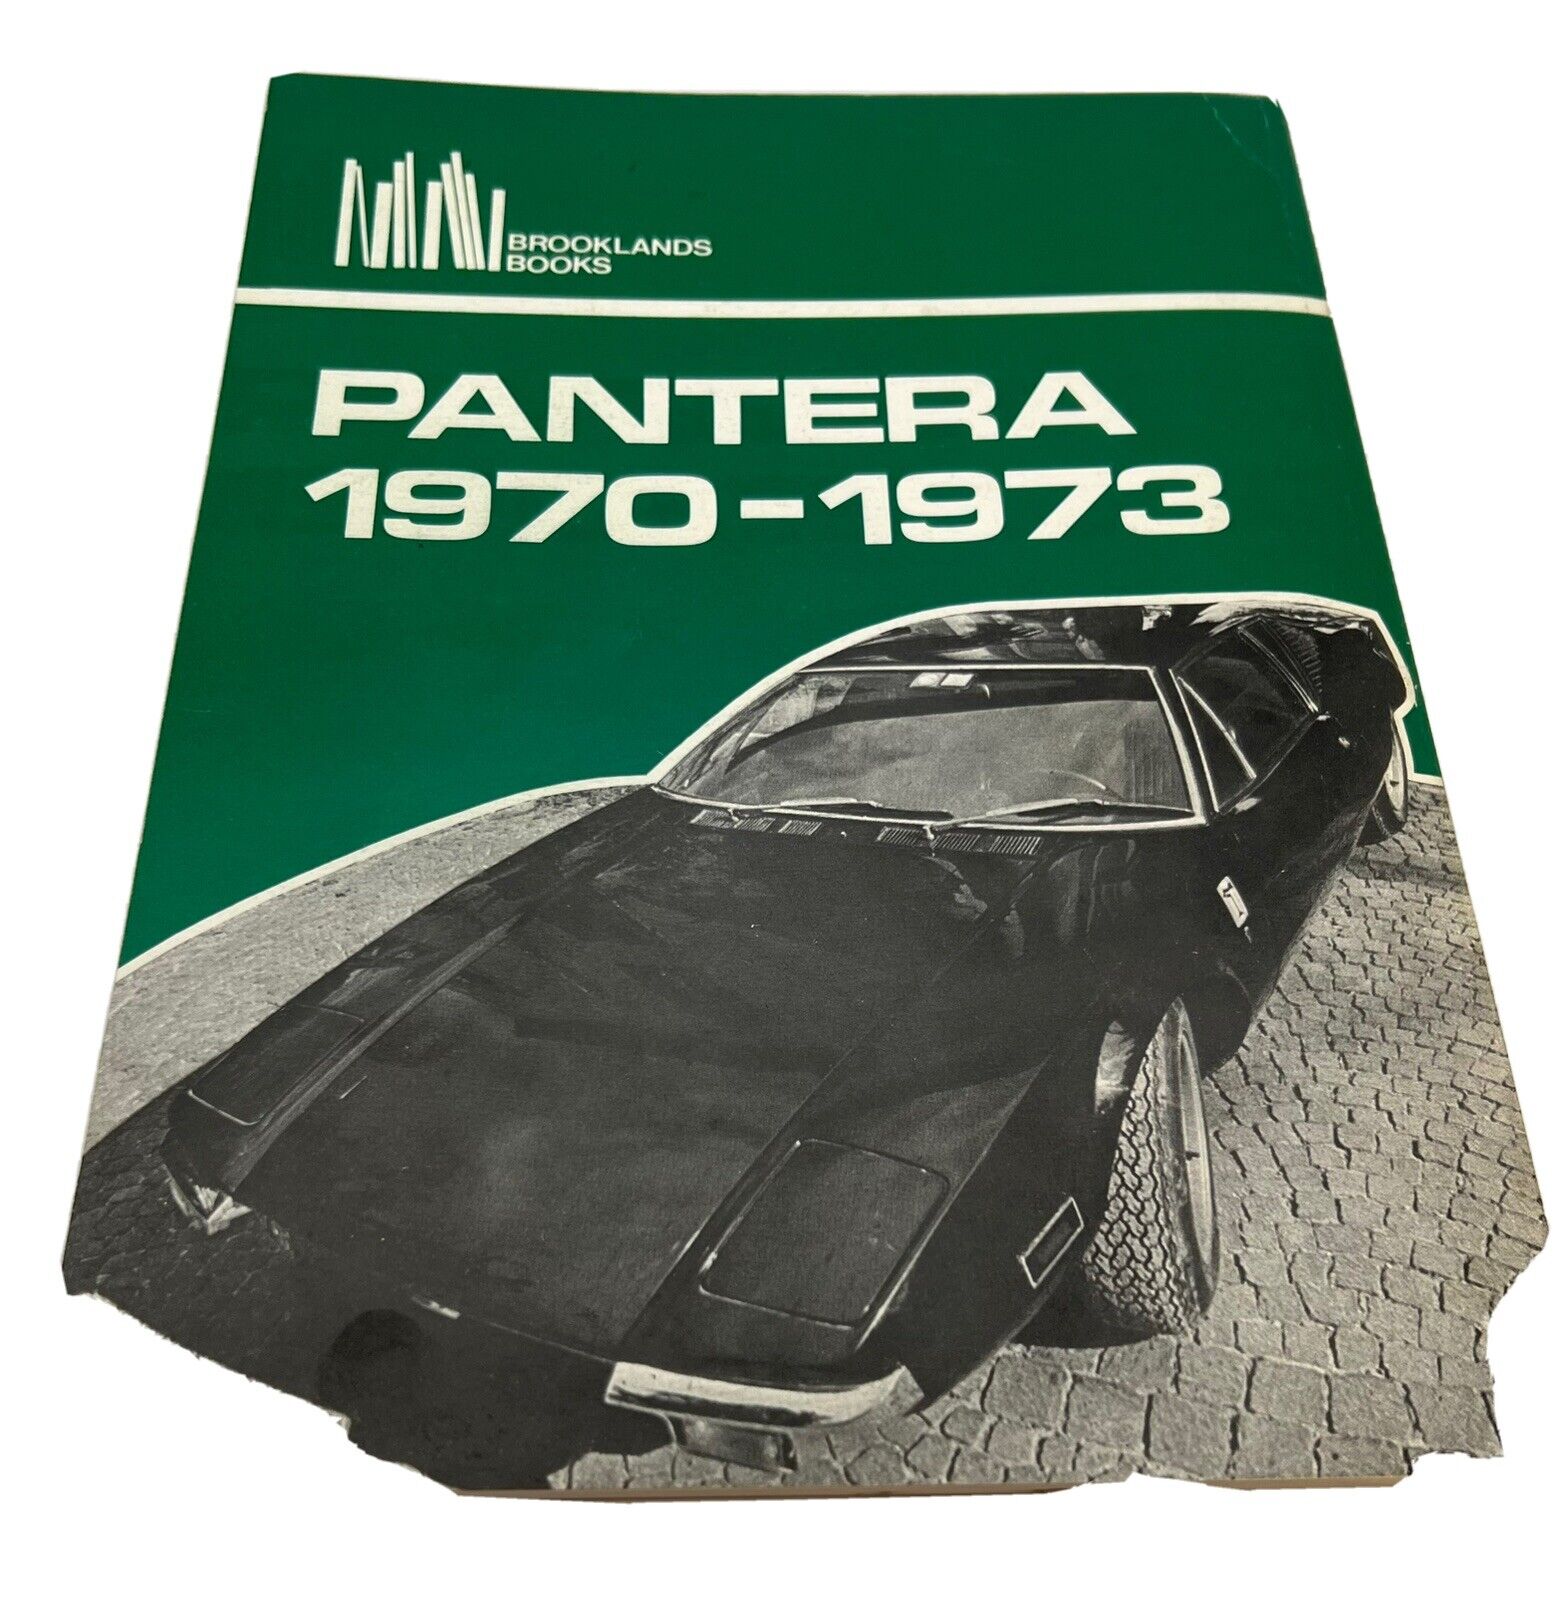 PANTERA 1970-1973 by BROOKLANDS BOOKS - VINTAGE